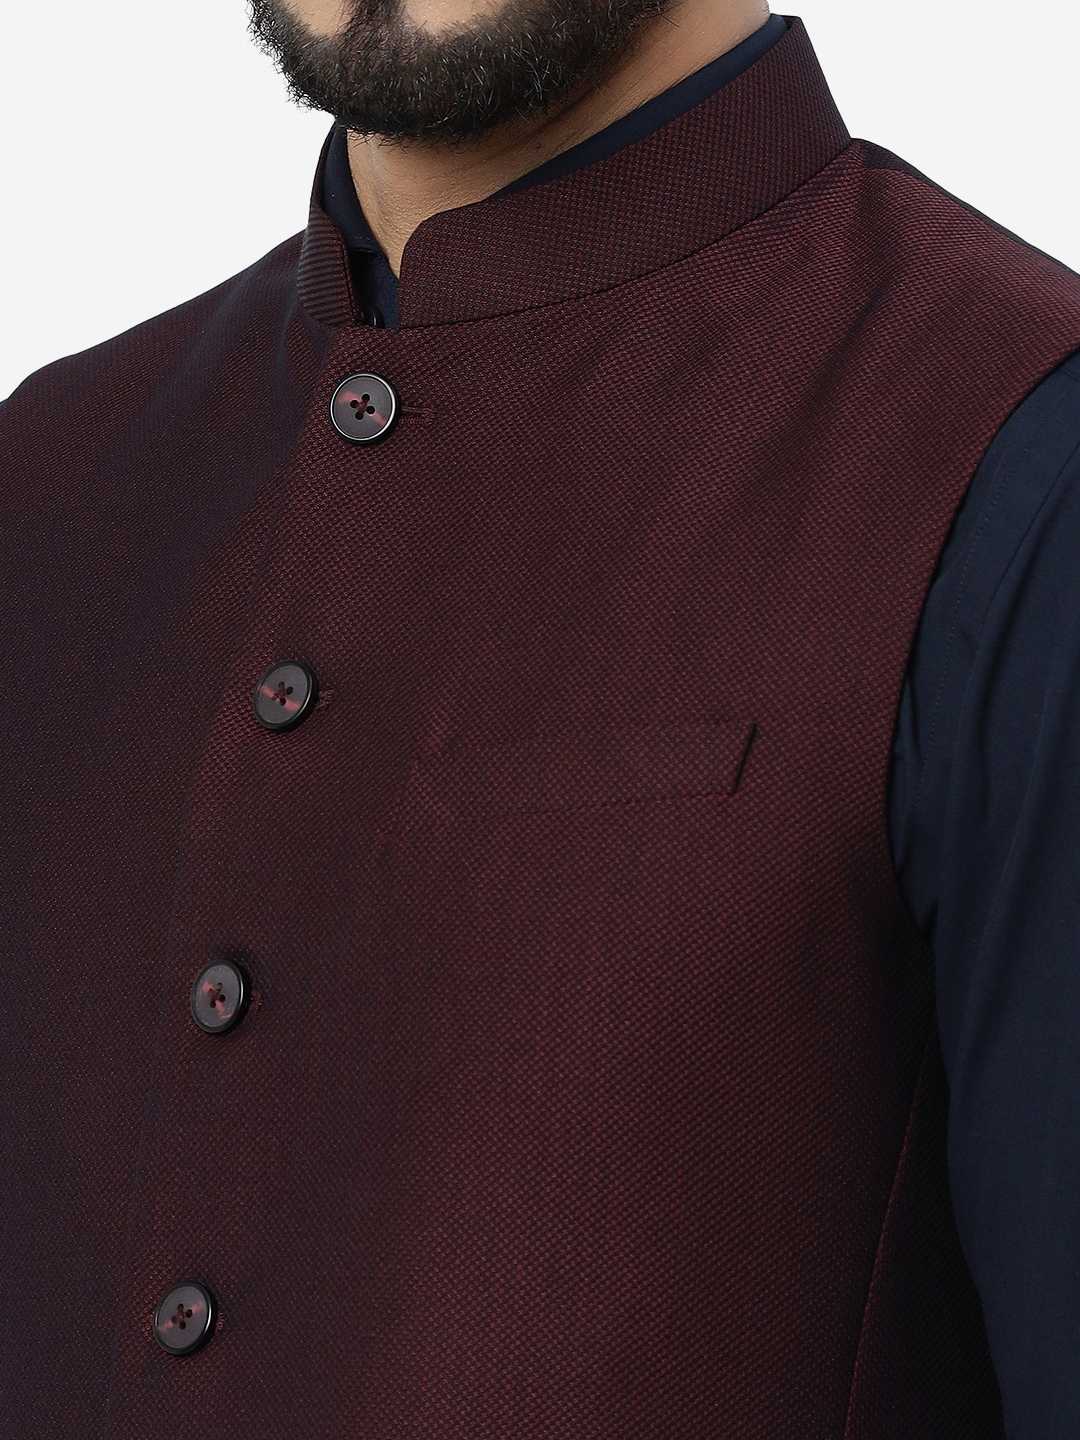 Buy Formal Nehru Jackets For Men Online in India | Amogue